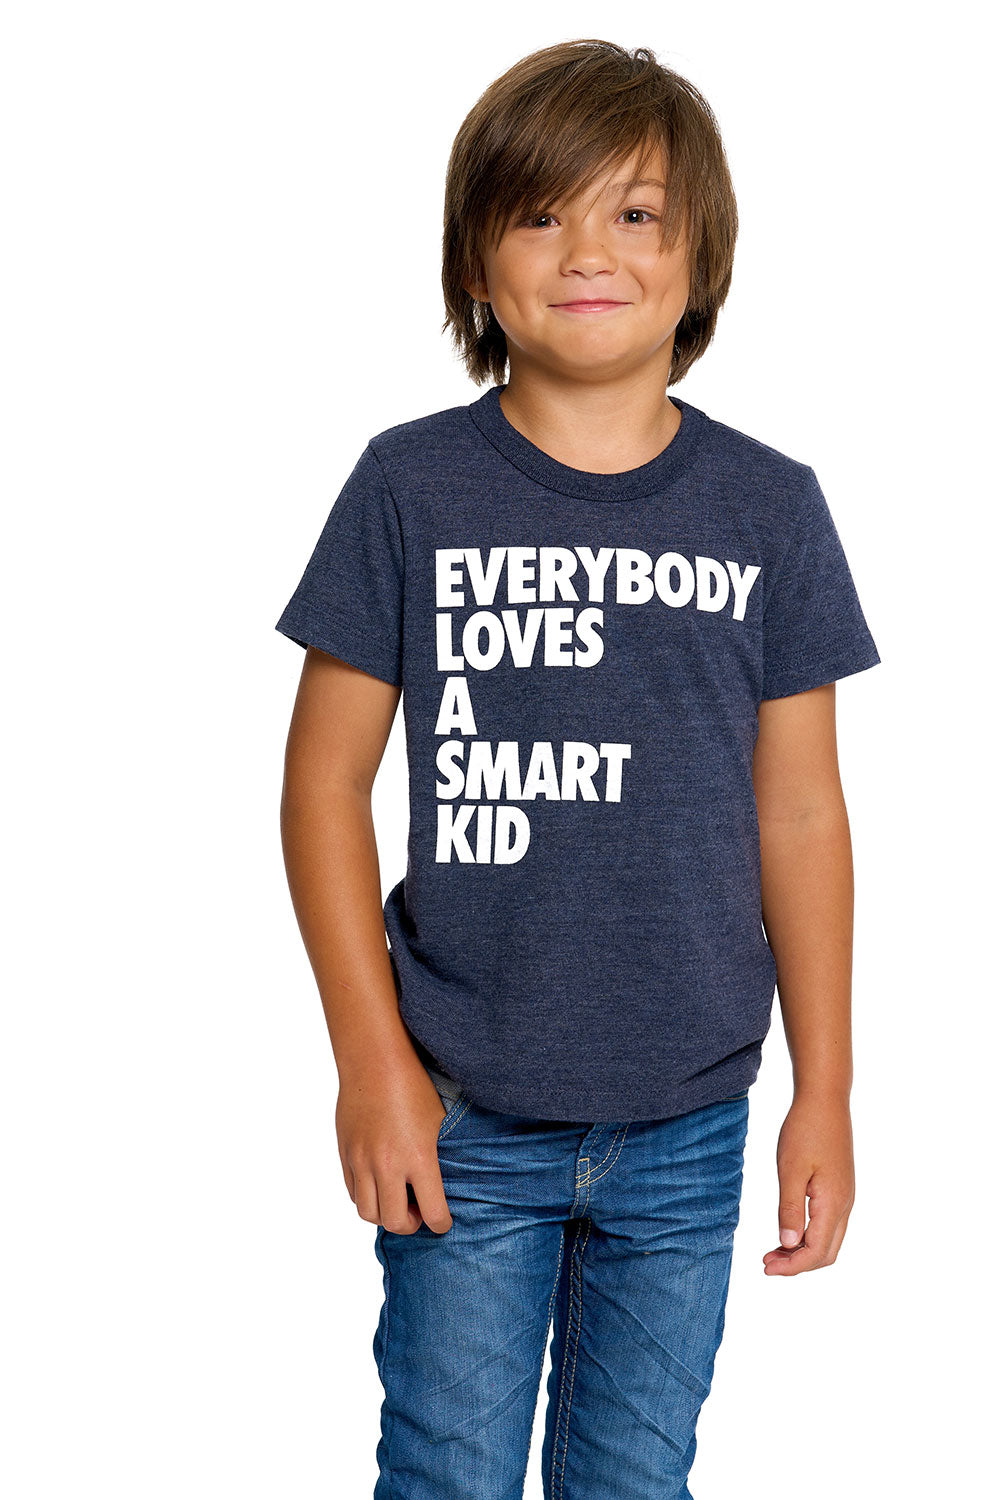 Smart Kid BOYS chaserbrand